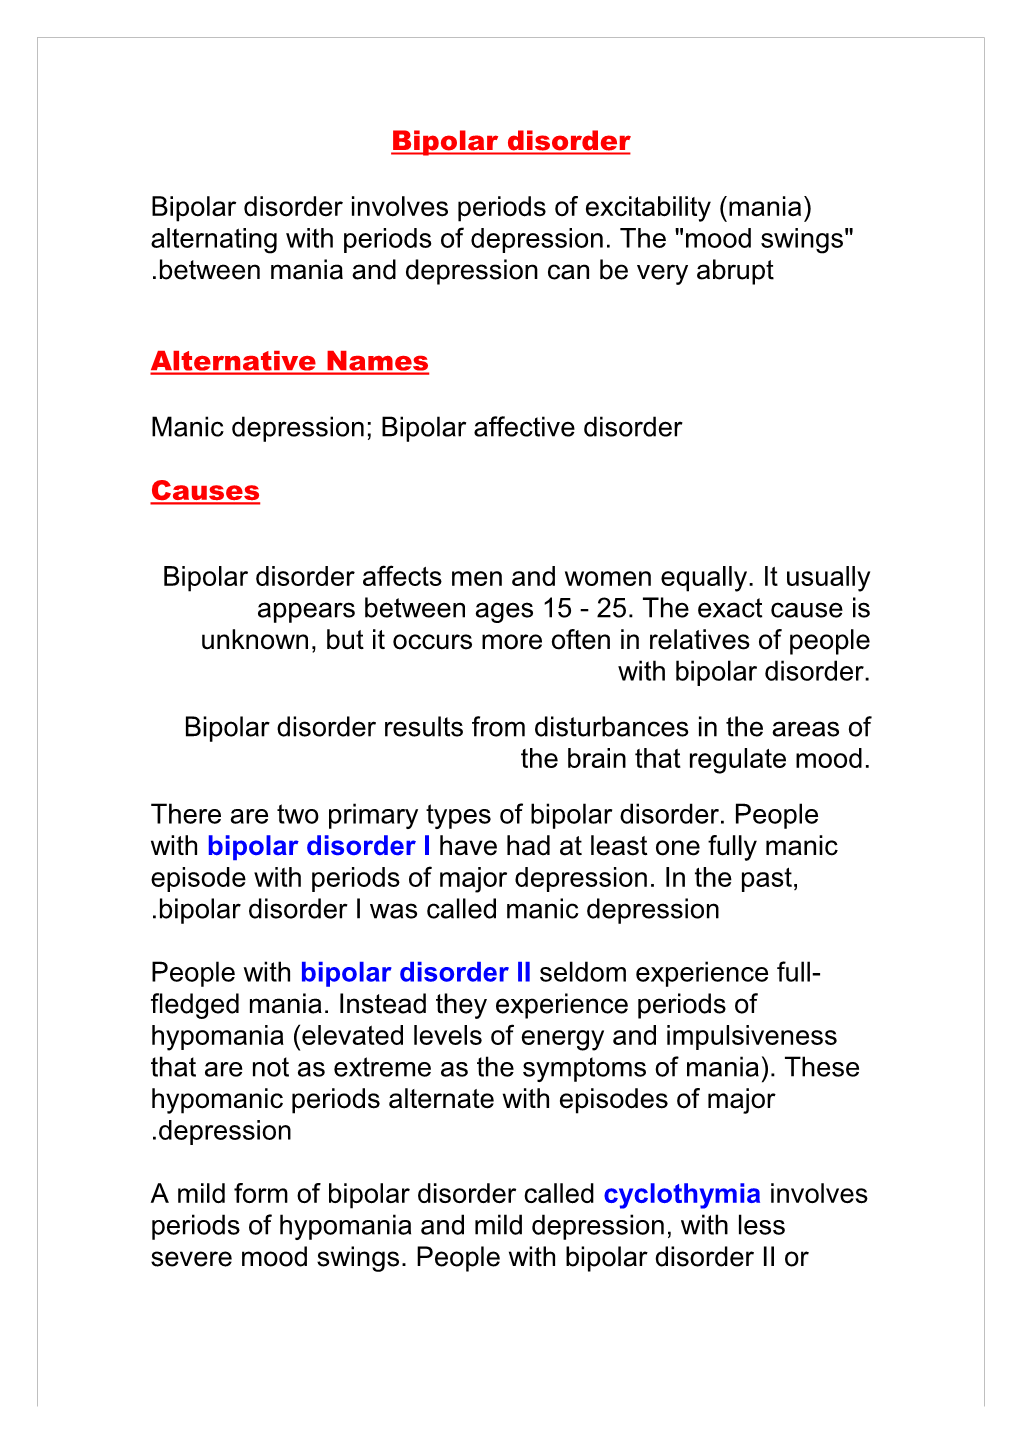 Manic Depression; Bipolar Affective Disorder